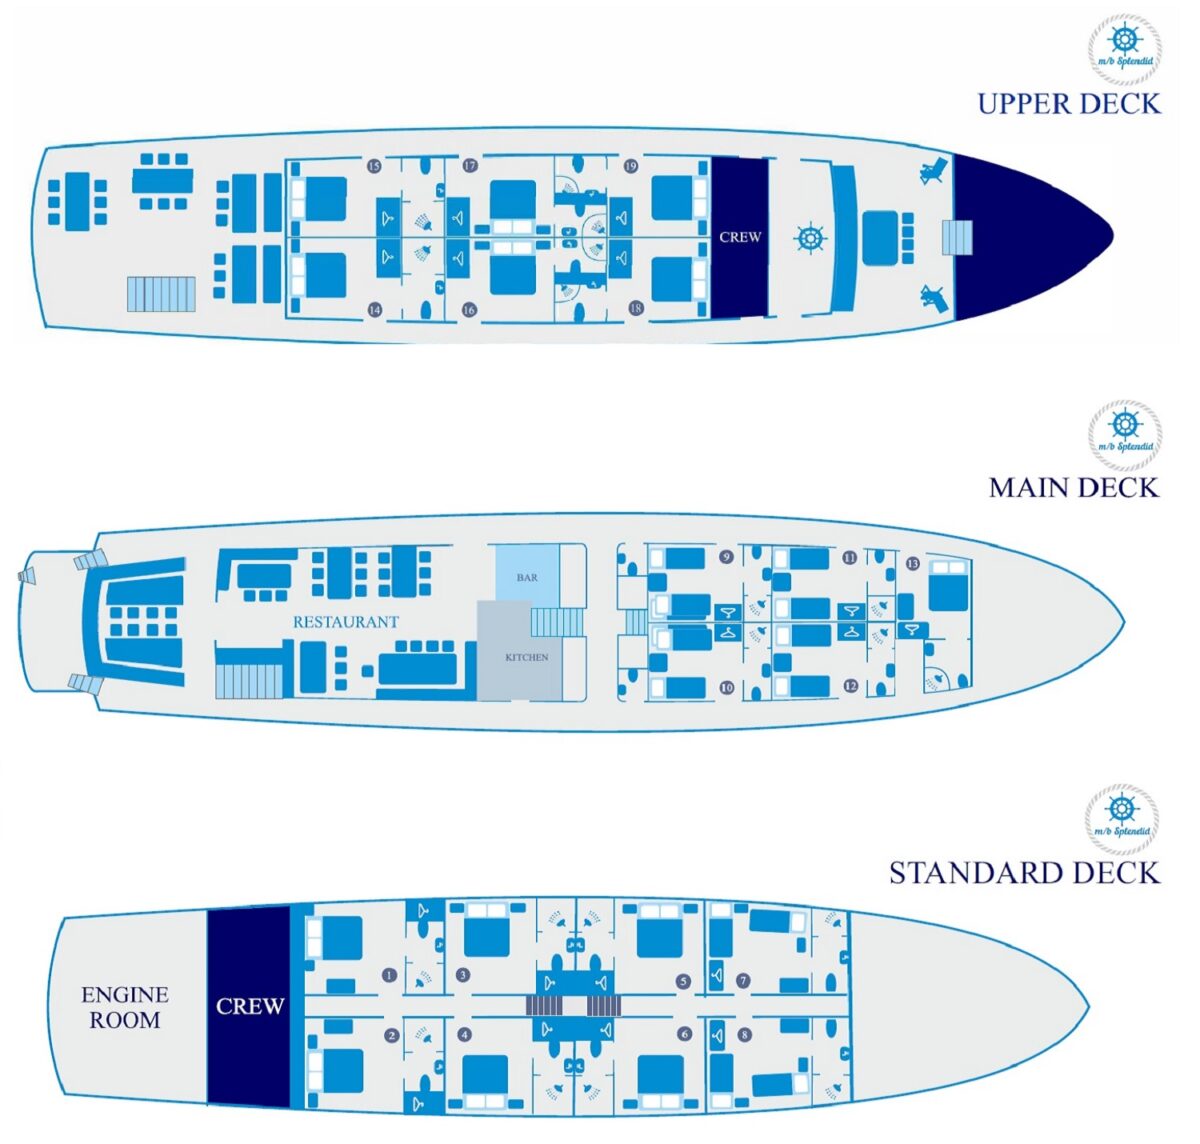 Deck Plan (All Decks) - MS Splendid Croatia Cruise Ship